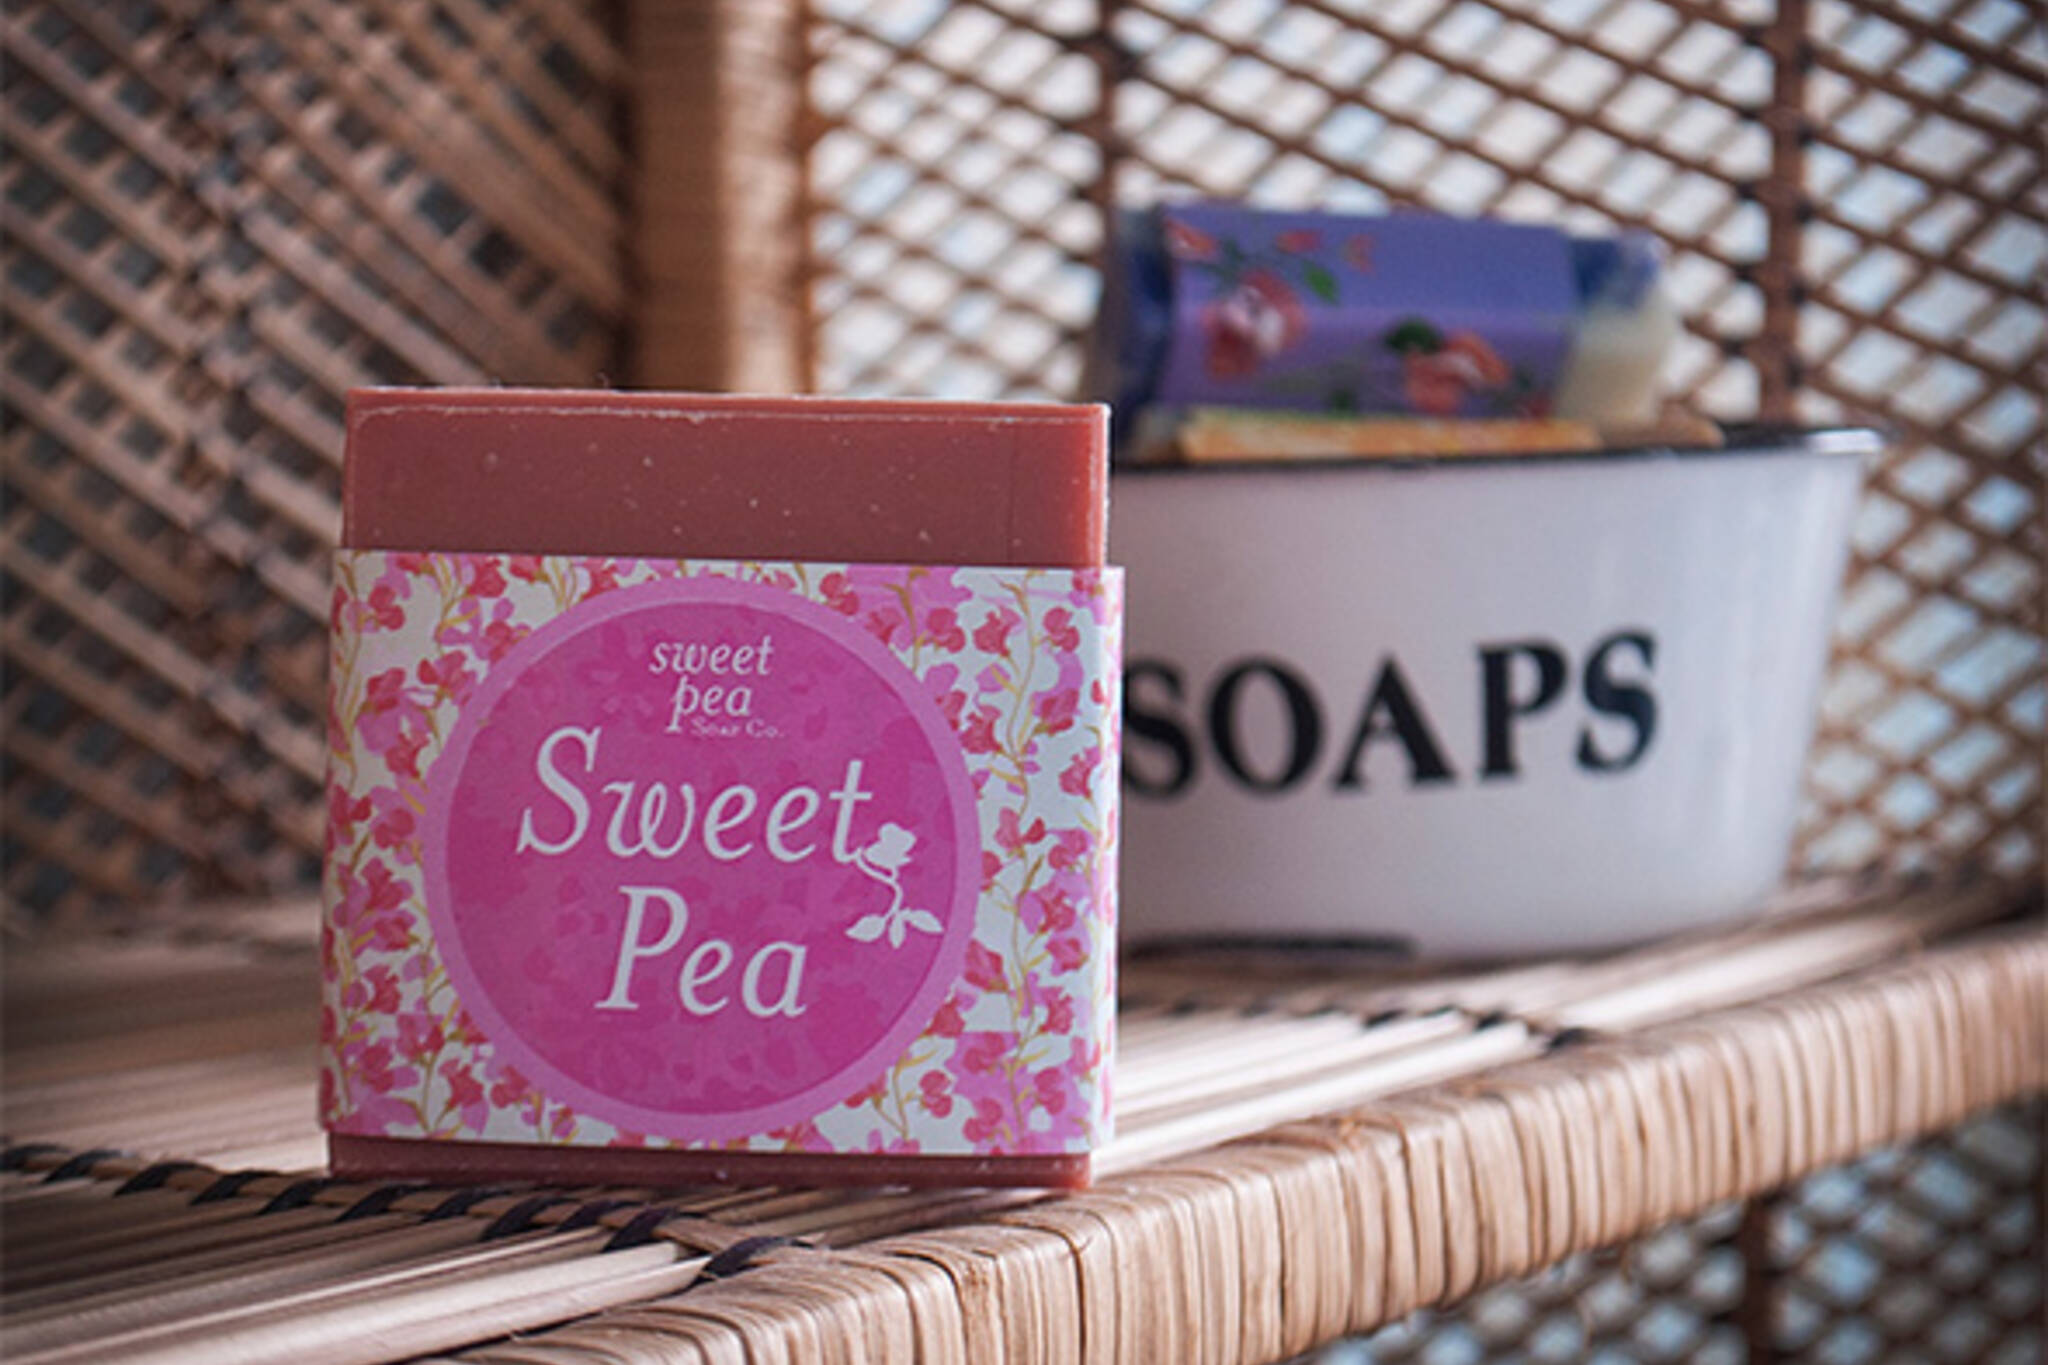 Sweet pea soap company